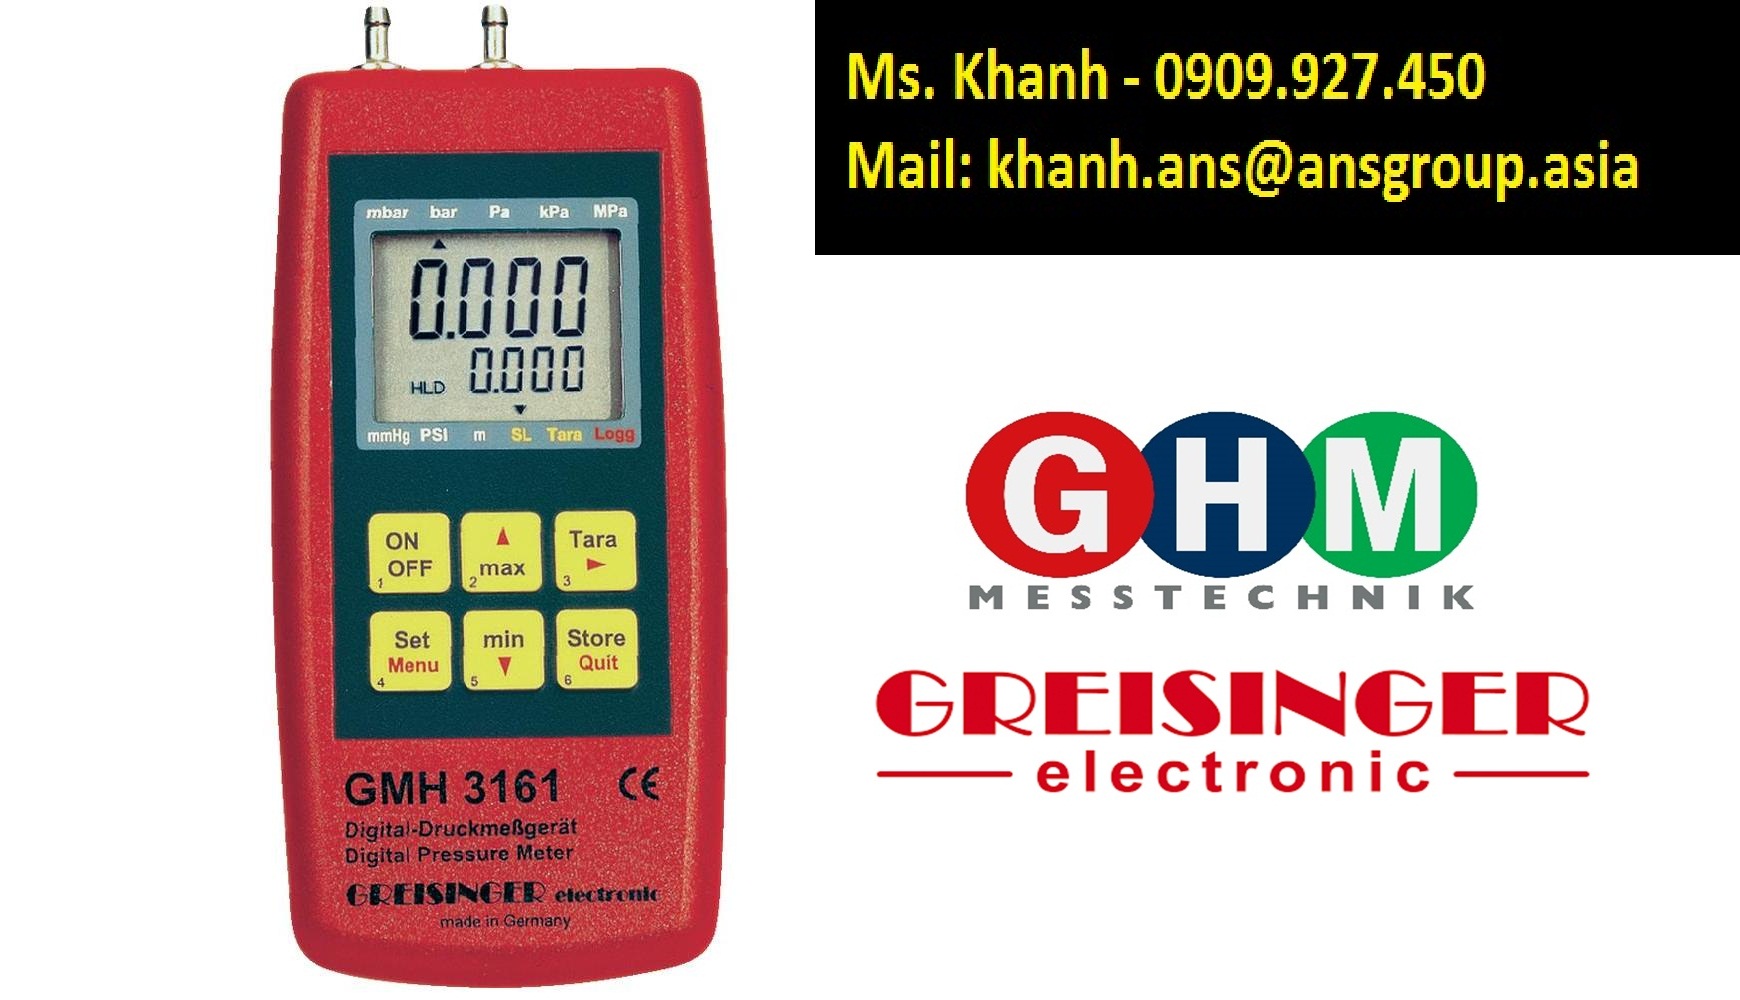 gmh-3161-12-gmh-3161-13-greisinger-pressure.png